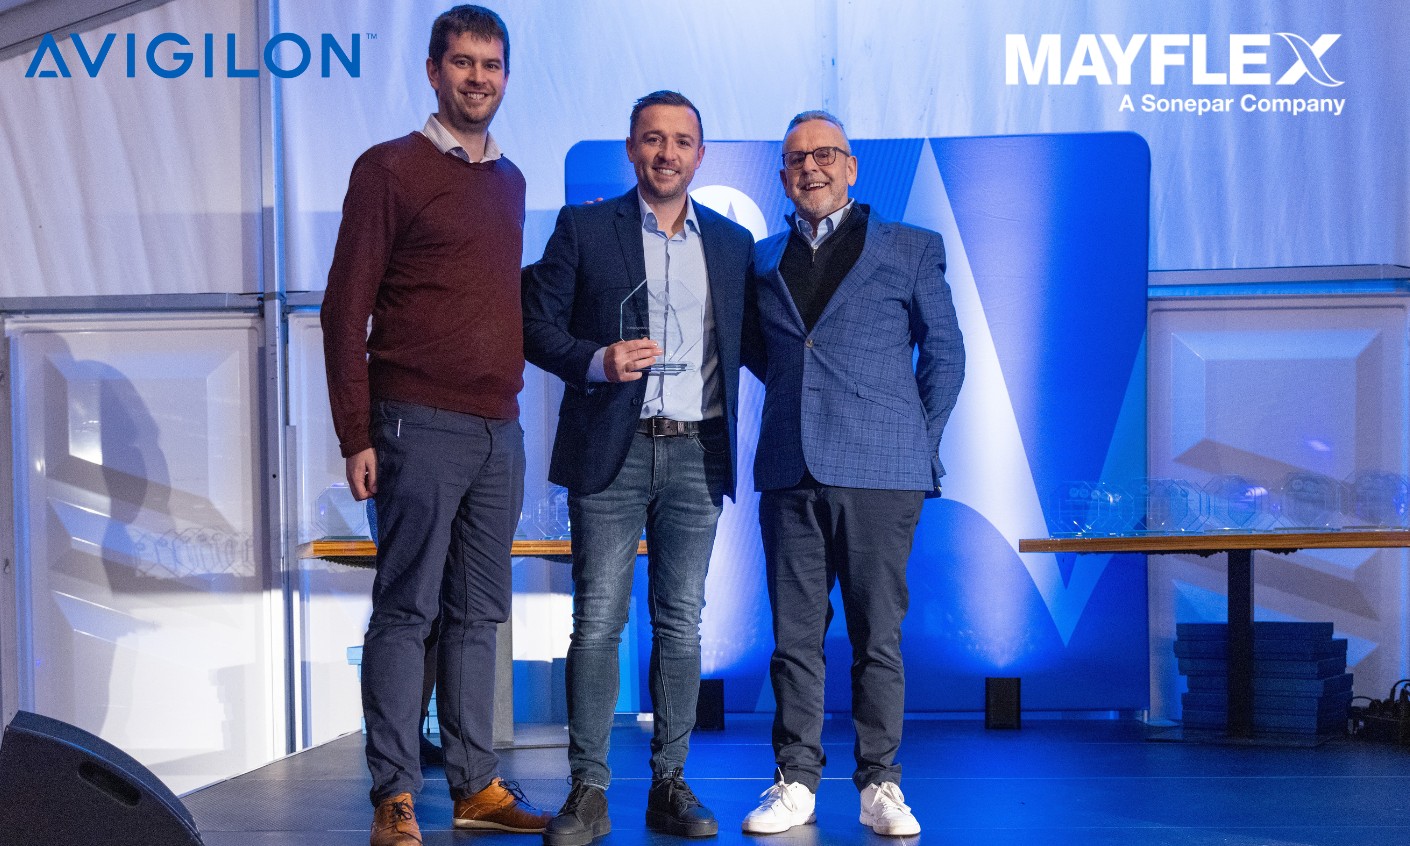 Mayflex win Avigilon Highest Overall Sales - UK and Europe Award